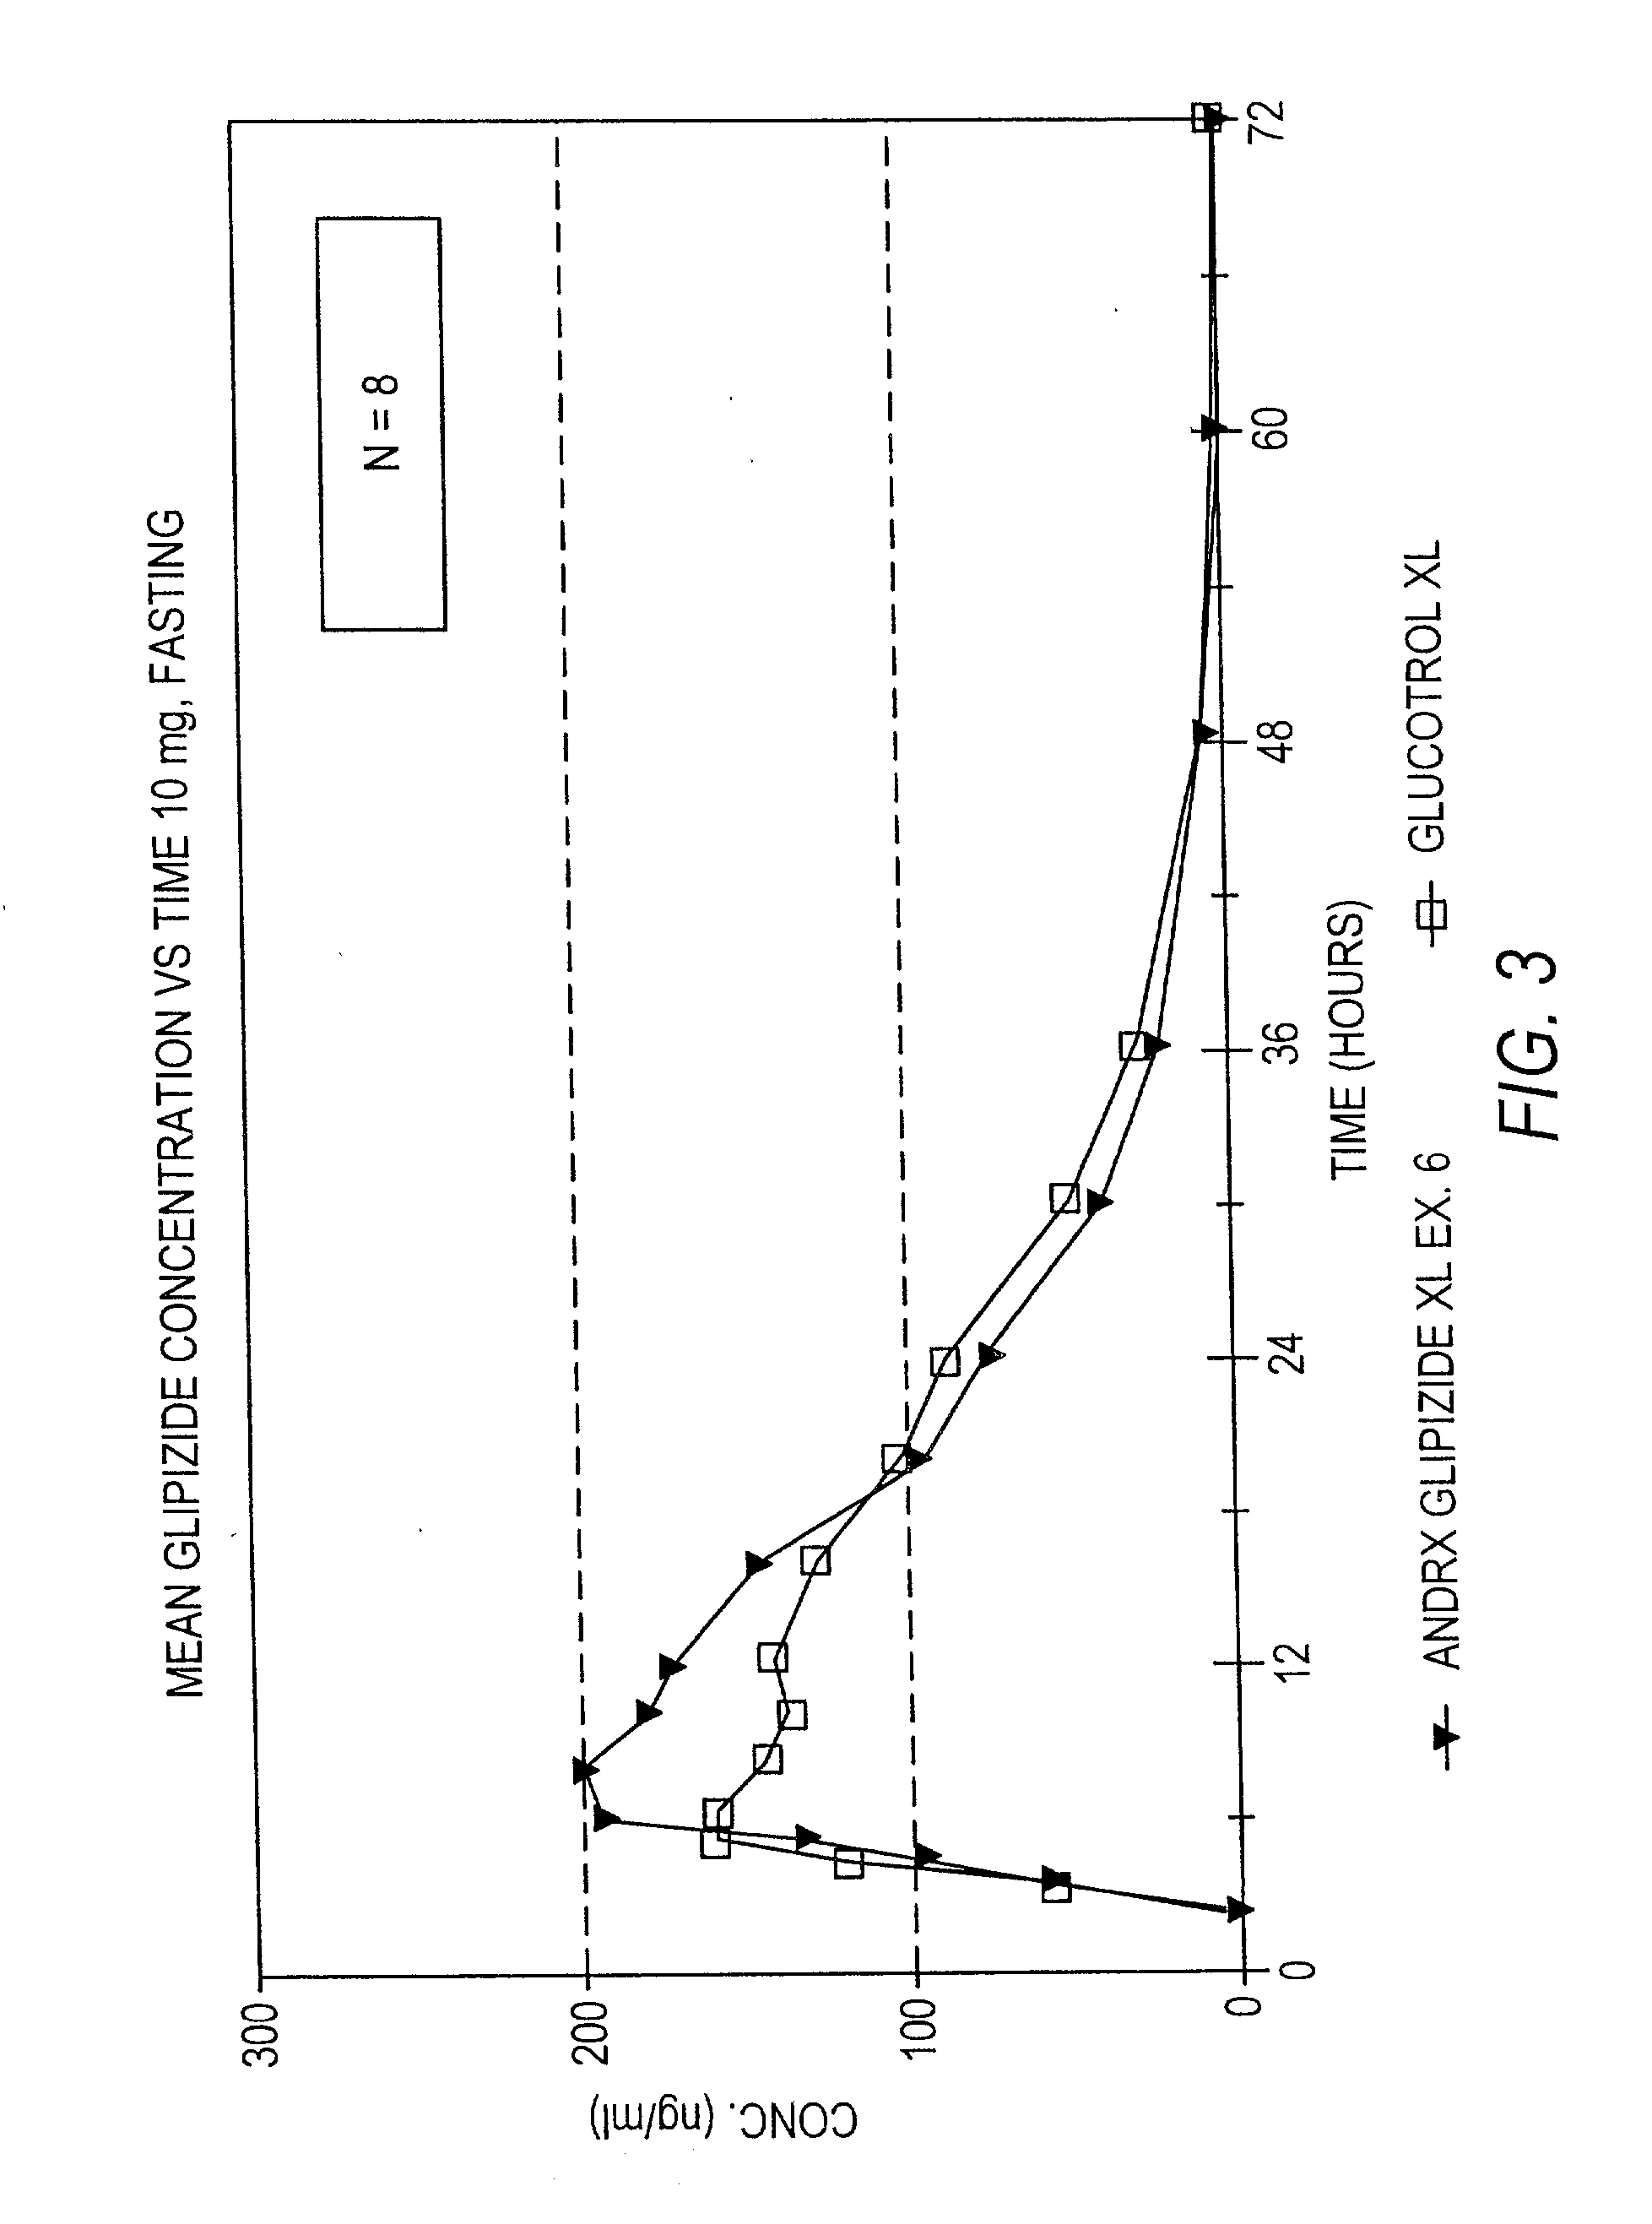 Controlled release sulfonylurea formulation